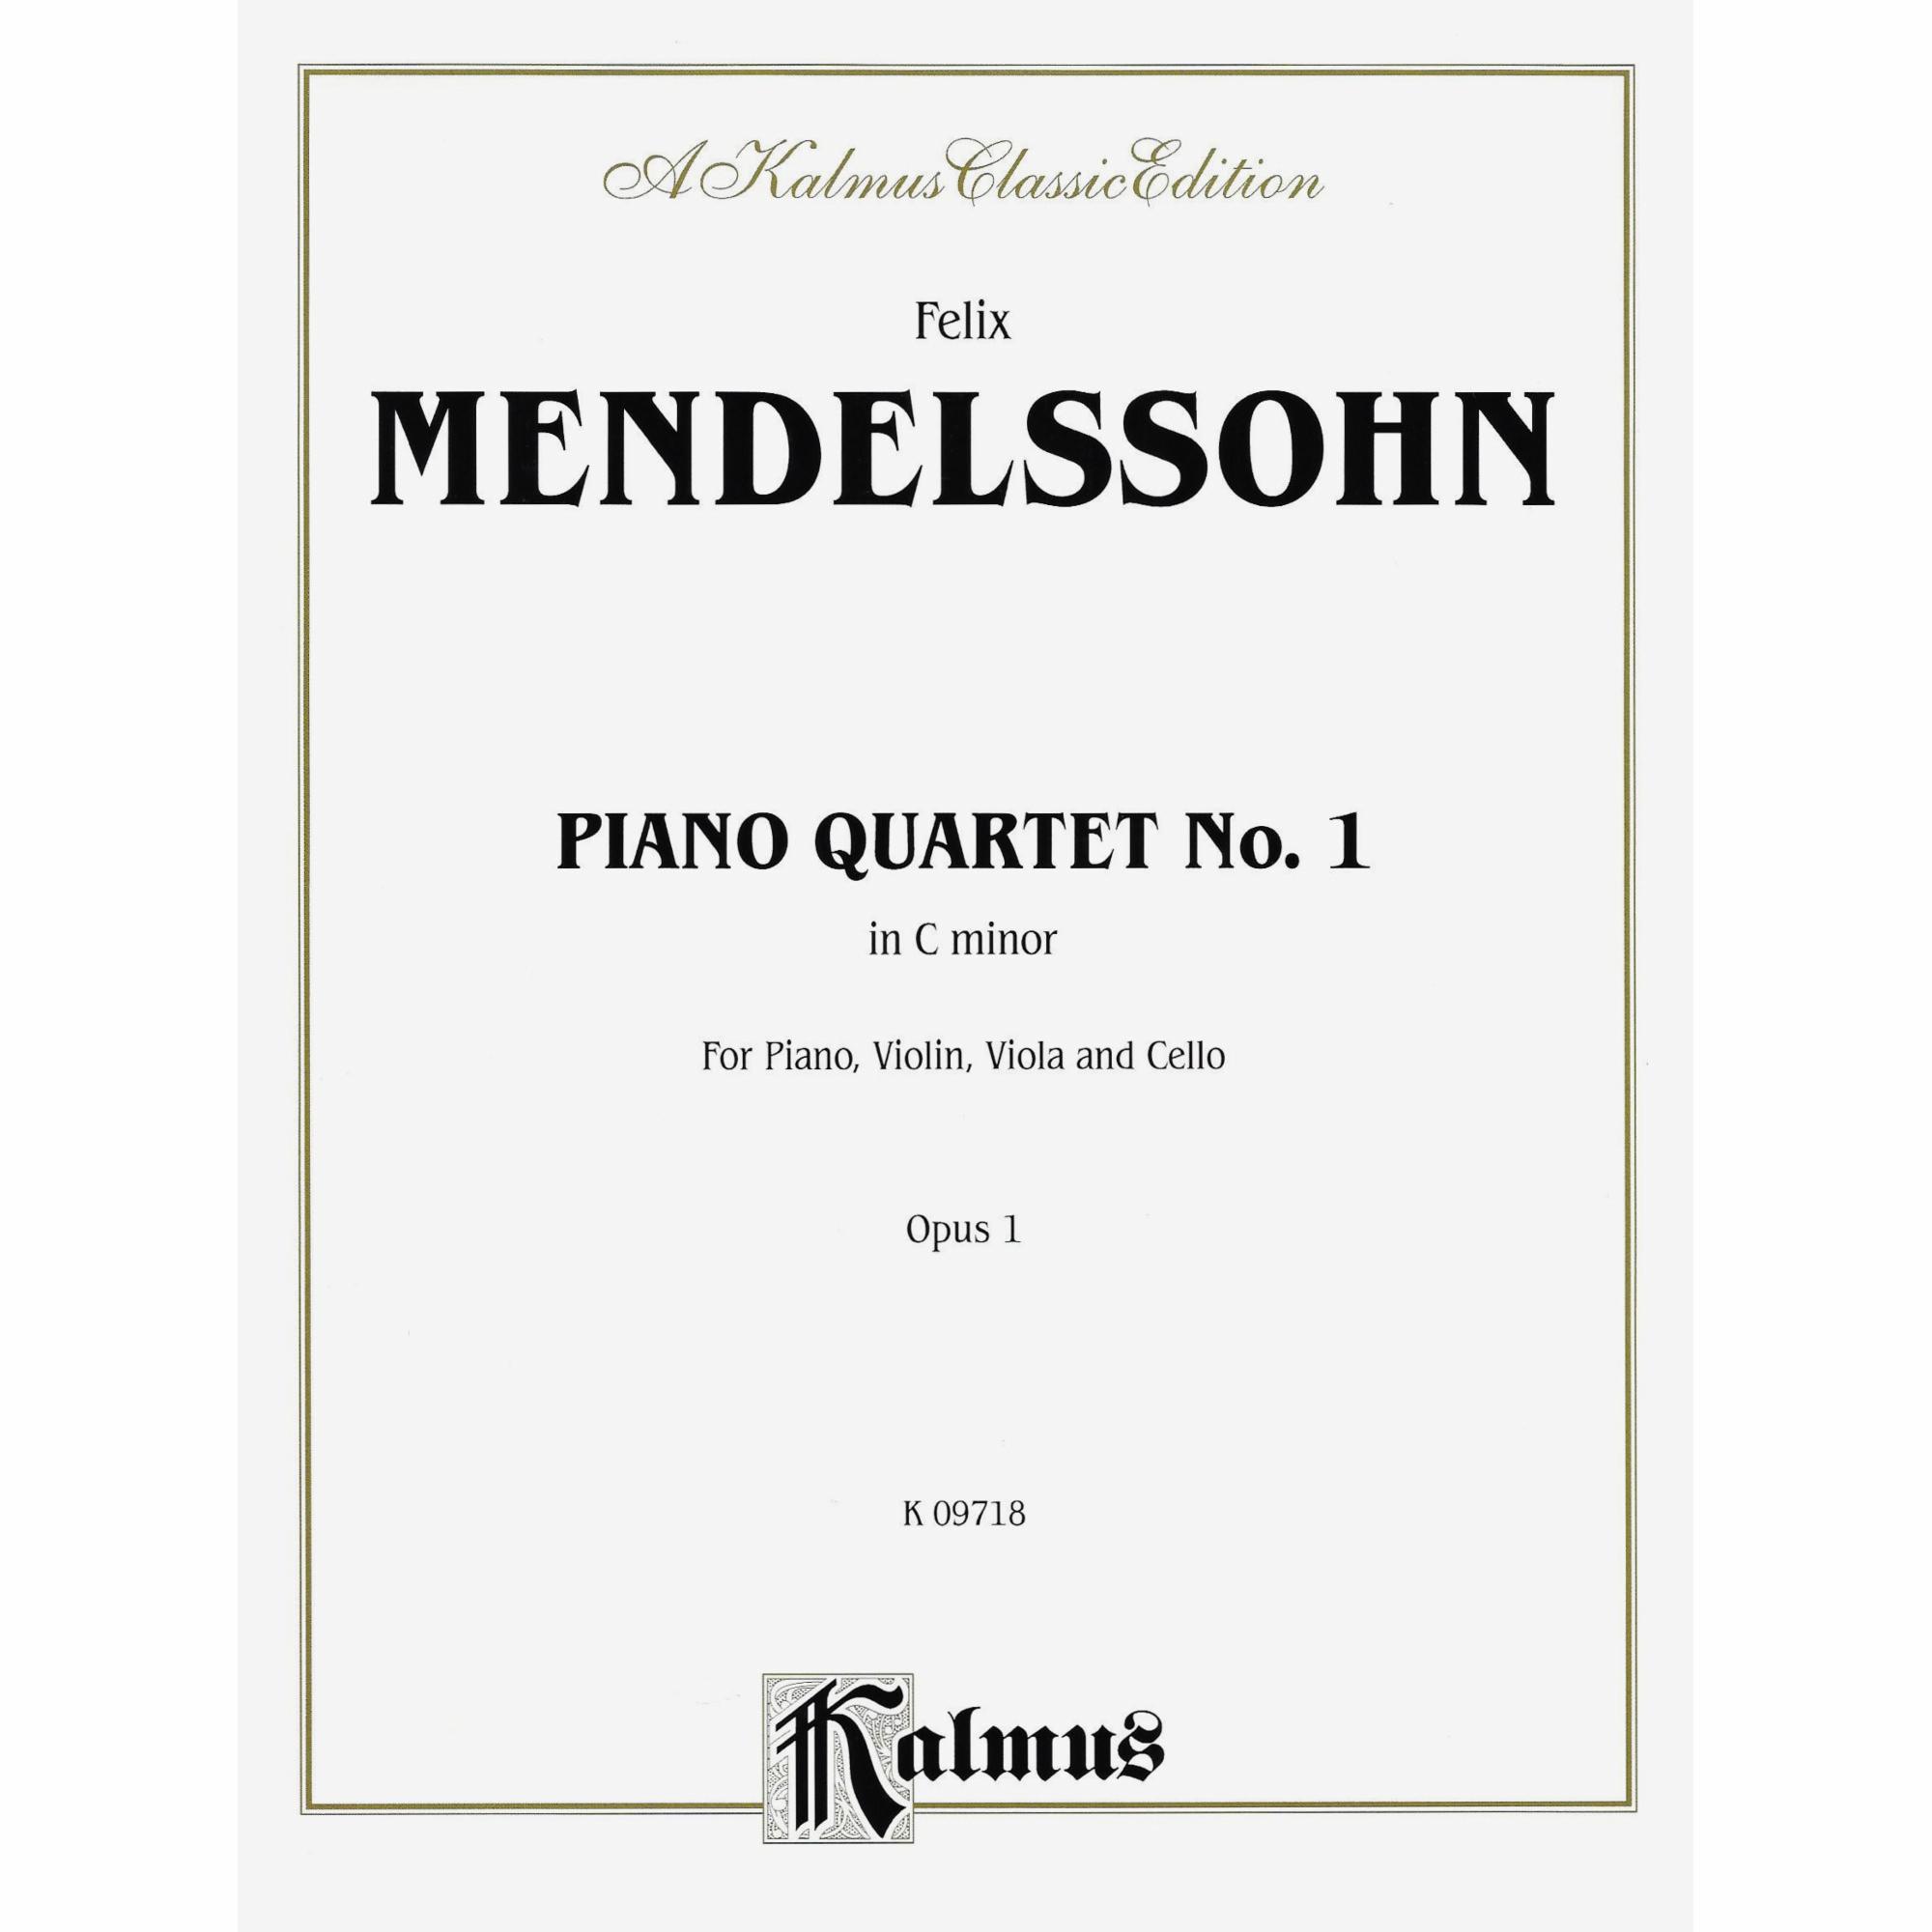 Mendelssohn -- Piano Quartet No. 1 in C Minor, Op. 1